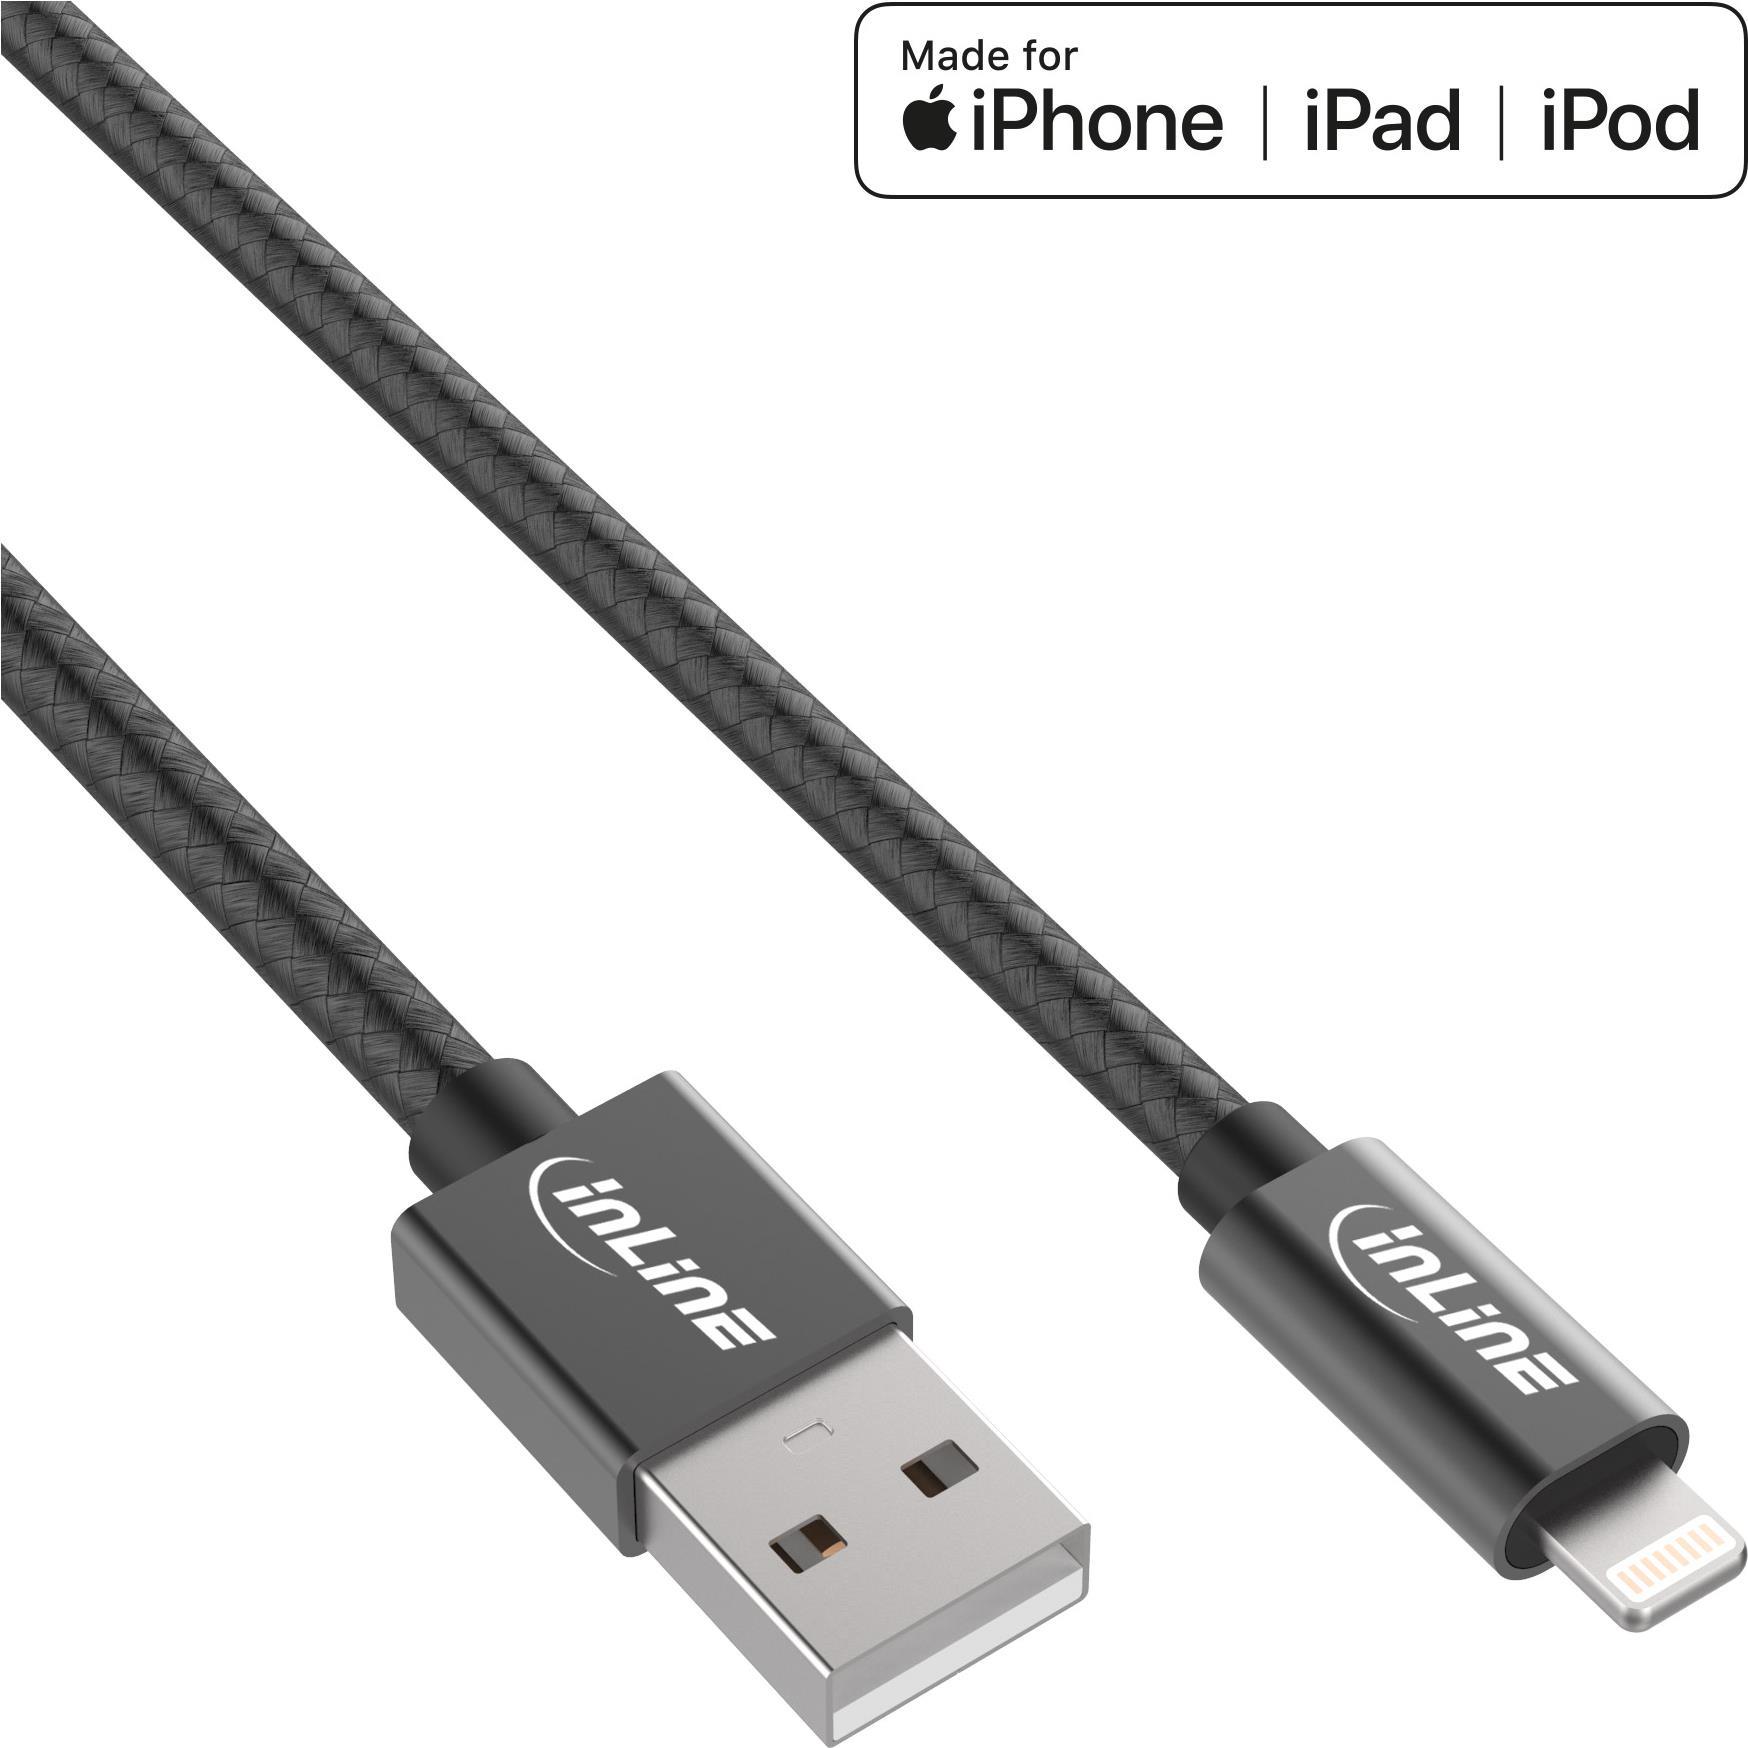 INLINE Lightning USB Kabel für iPad iPhone iPod